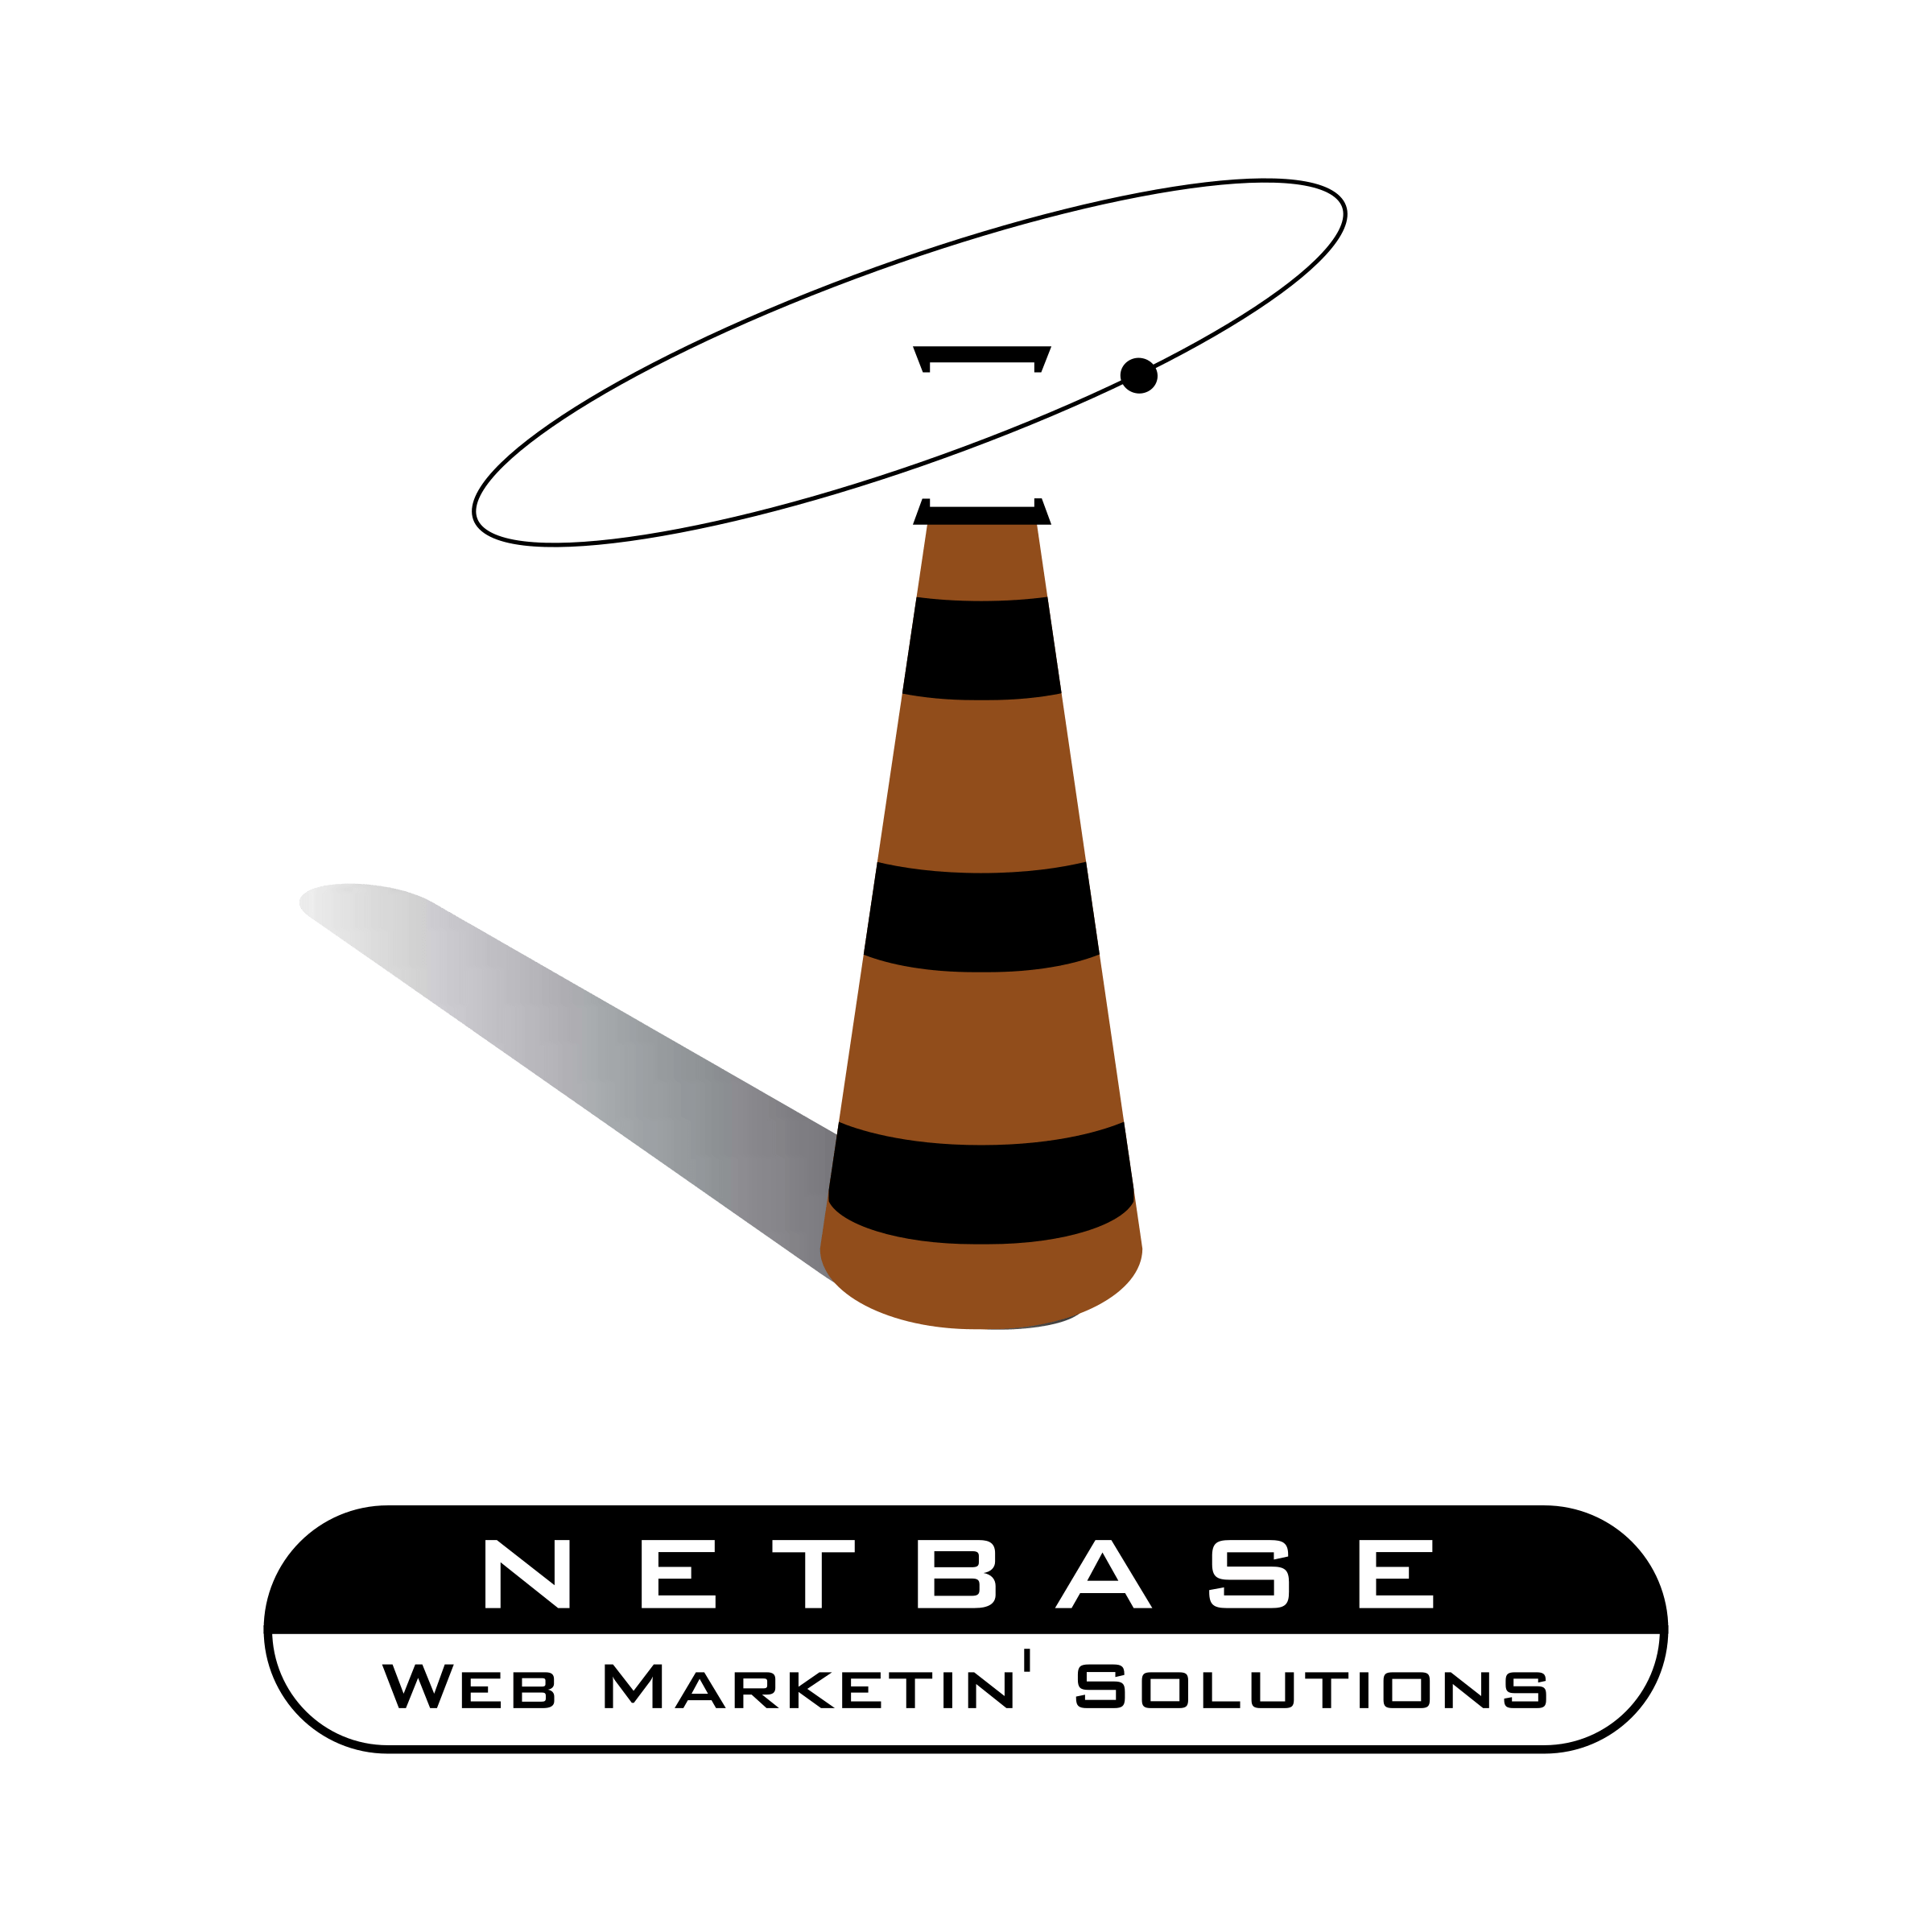 NetBase Logo - Netbase Logo PNG Transparent & SVG Vector - Freebie Supply